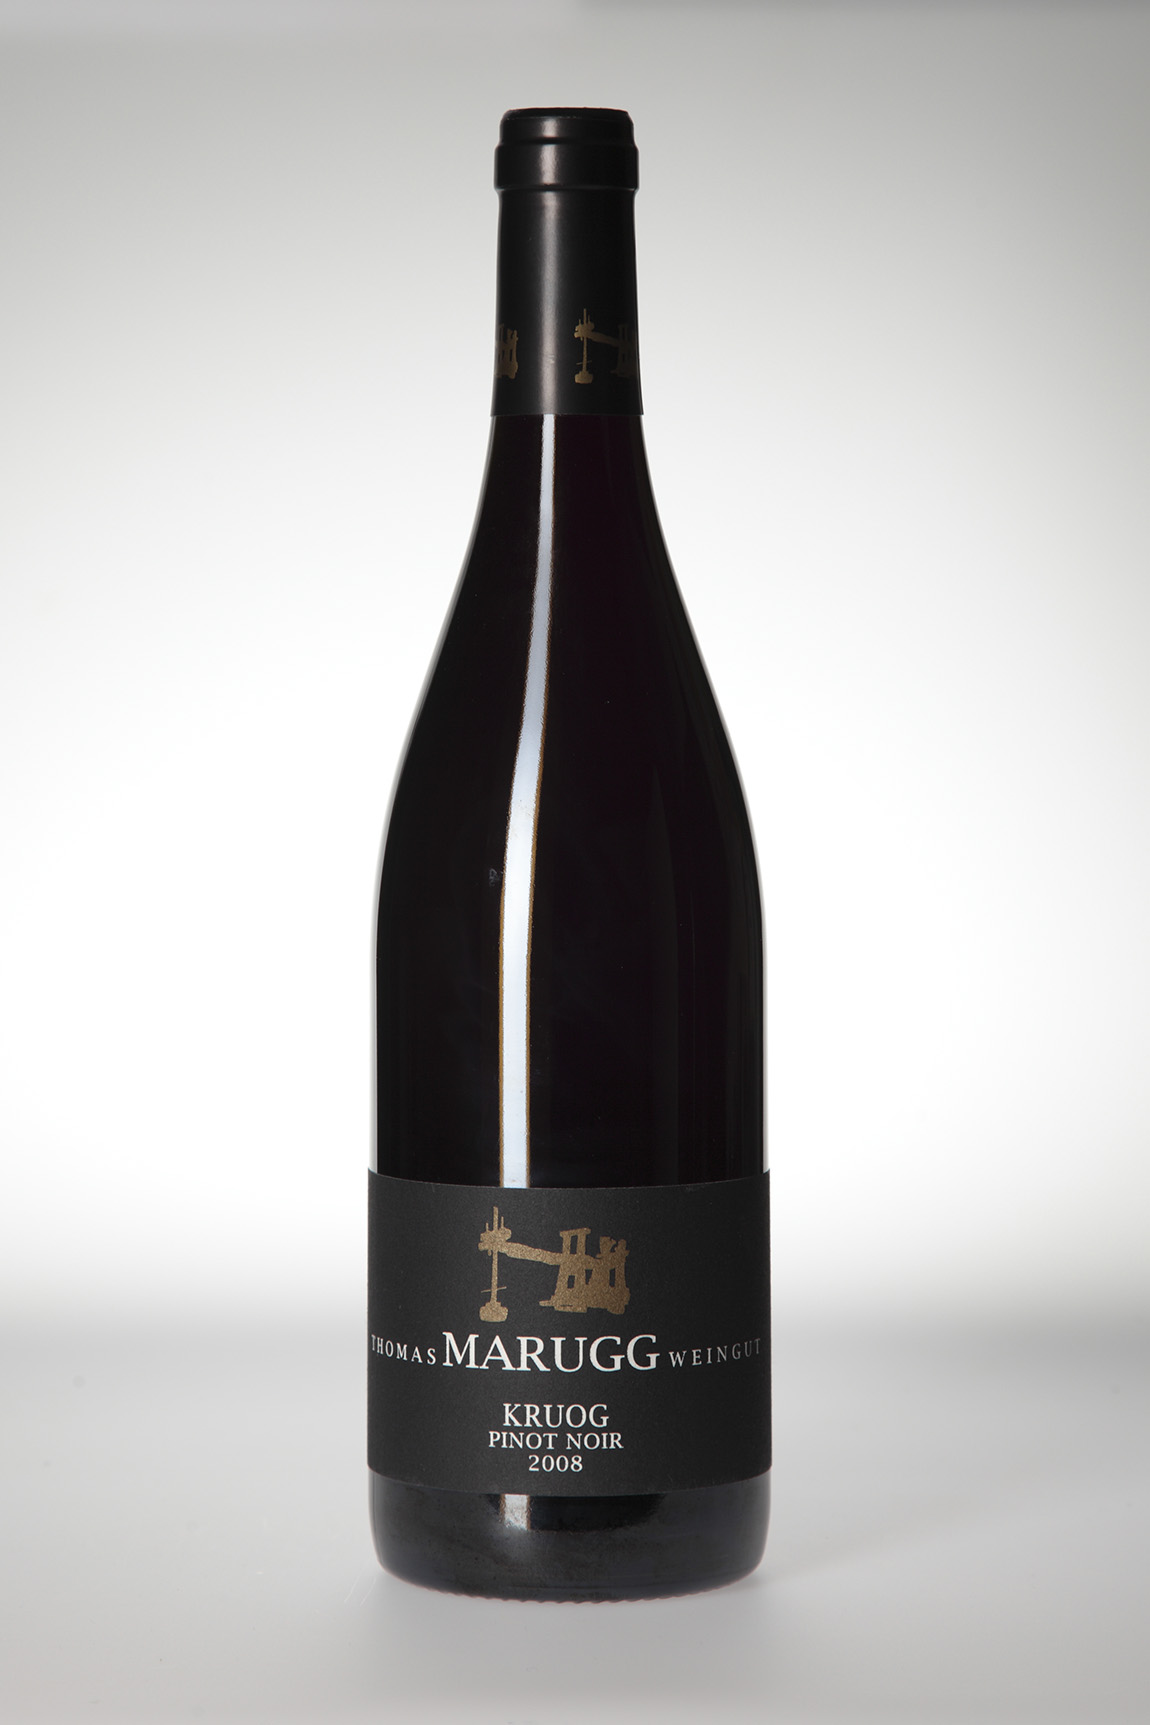 Thomas Marugg Winery: The art of the grape